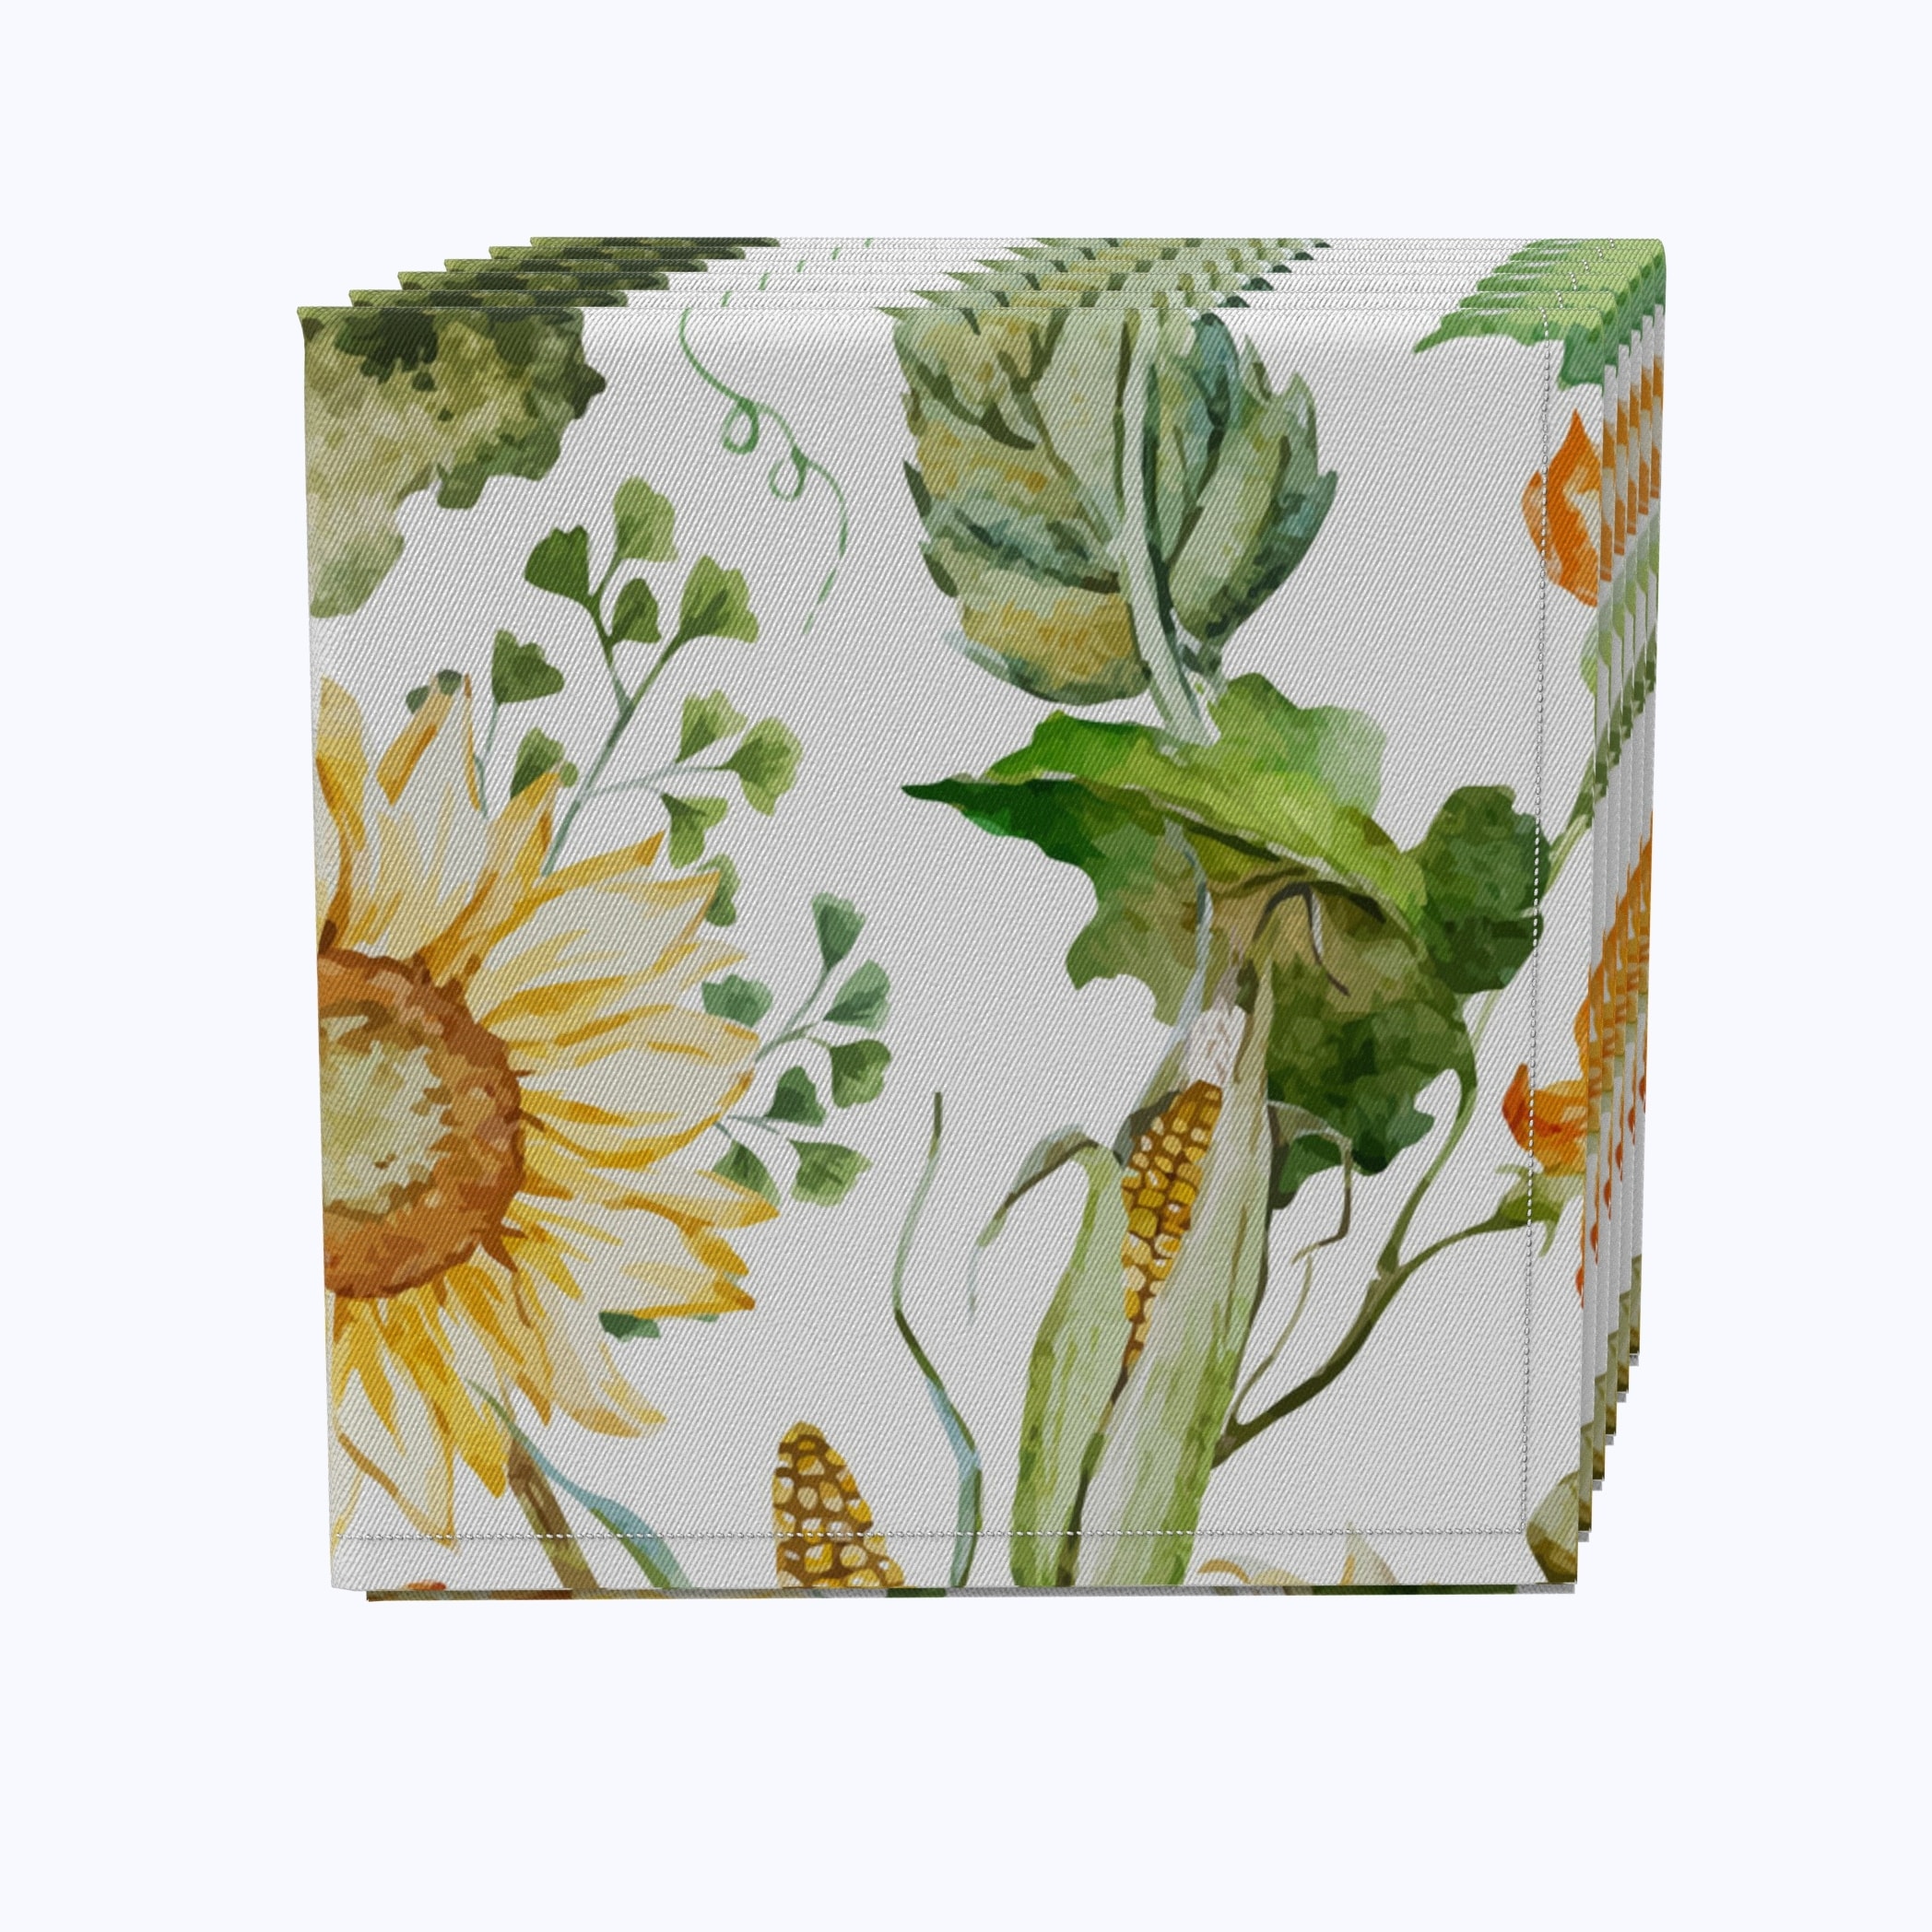 Fabric Textile Products, Inc. Napkin Set of 4, 100% Cotton, 20x20", Floral 234 - 20 x 20